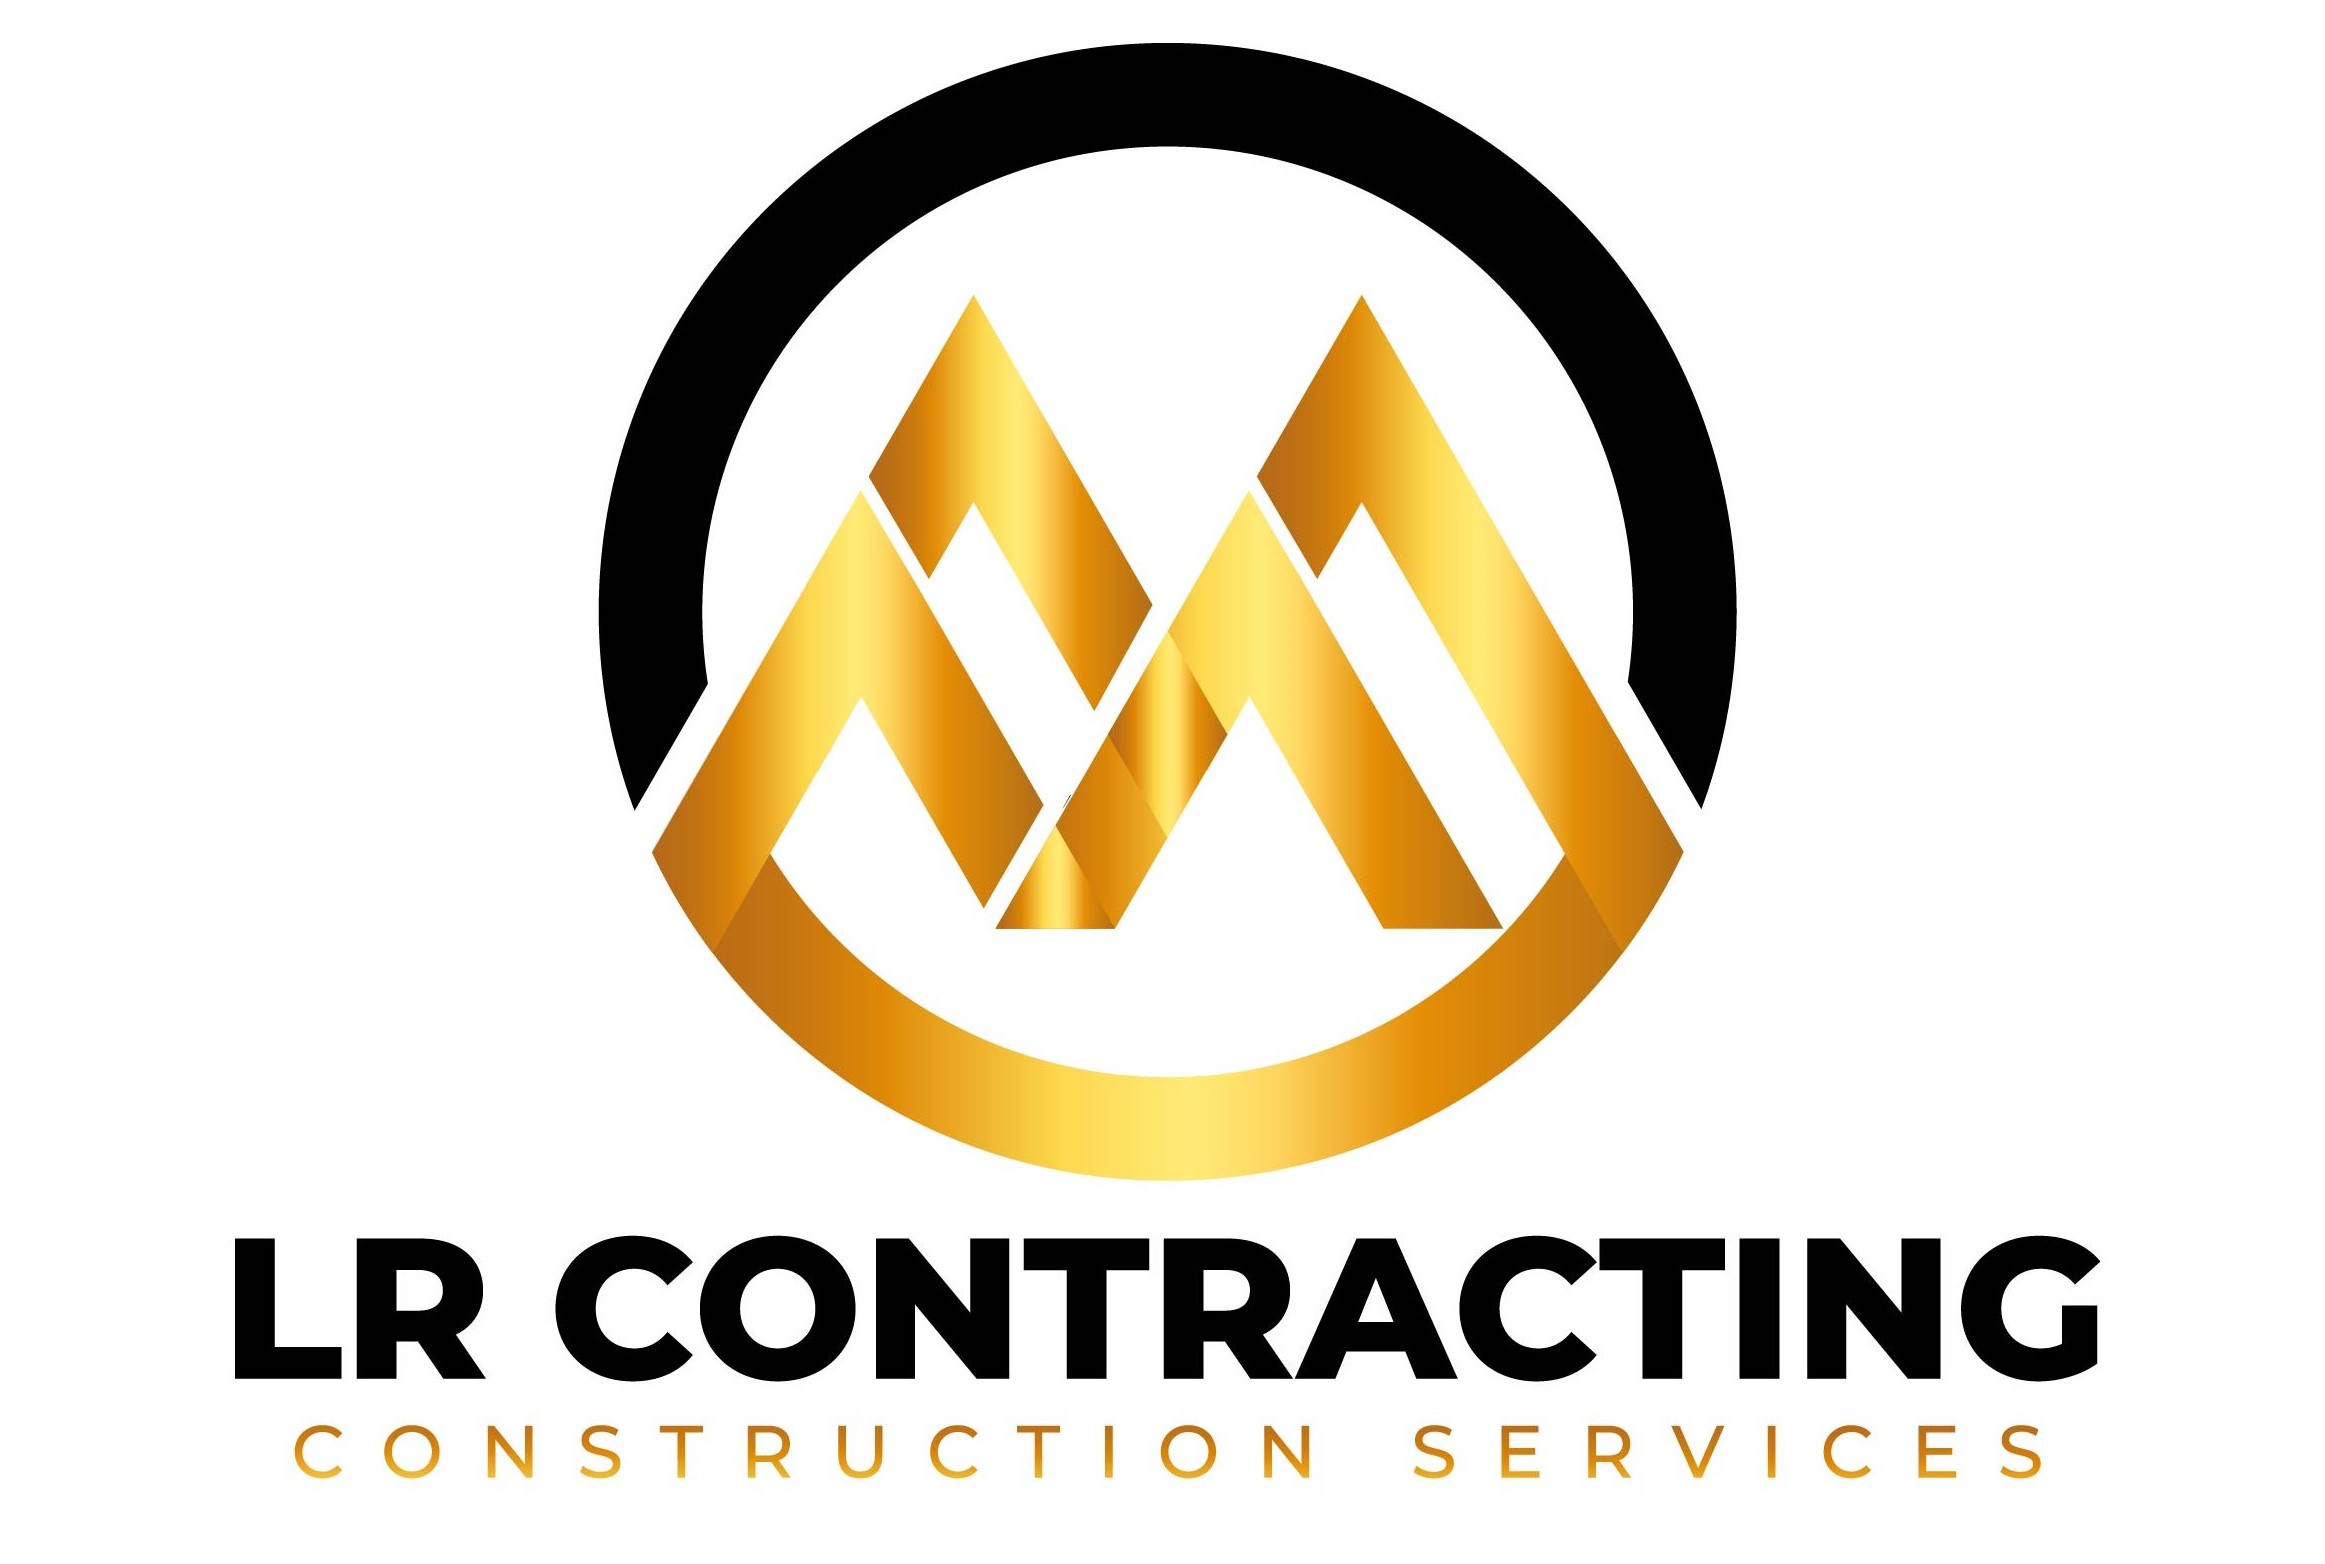 LR Contracting's logo